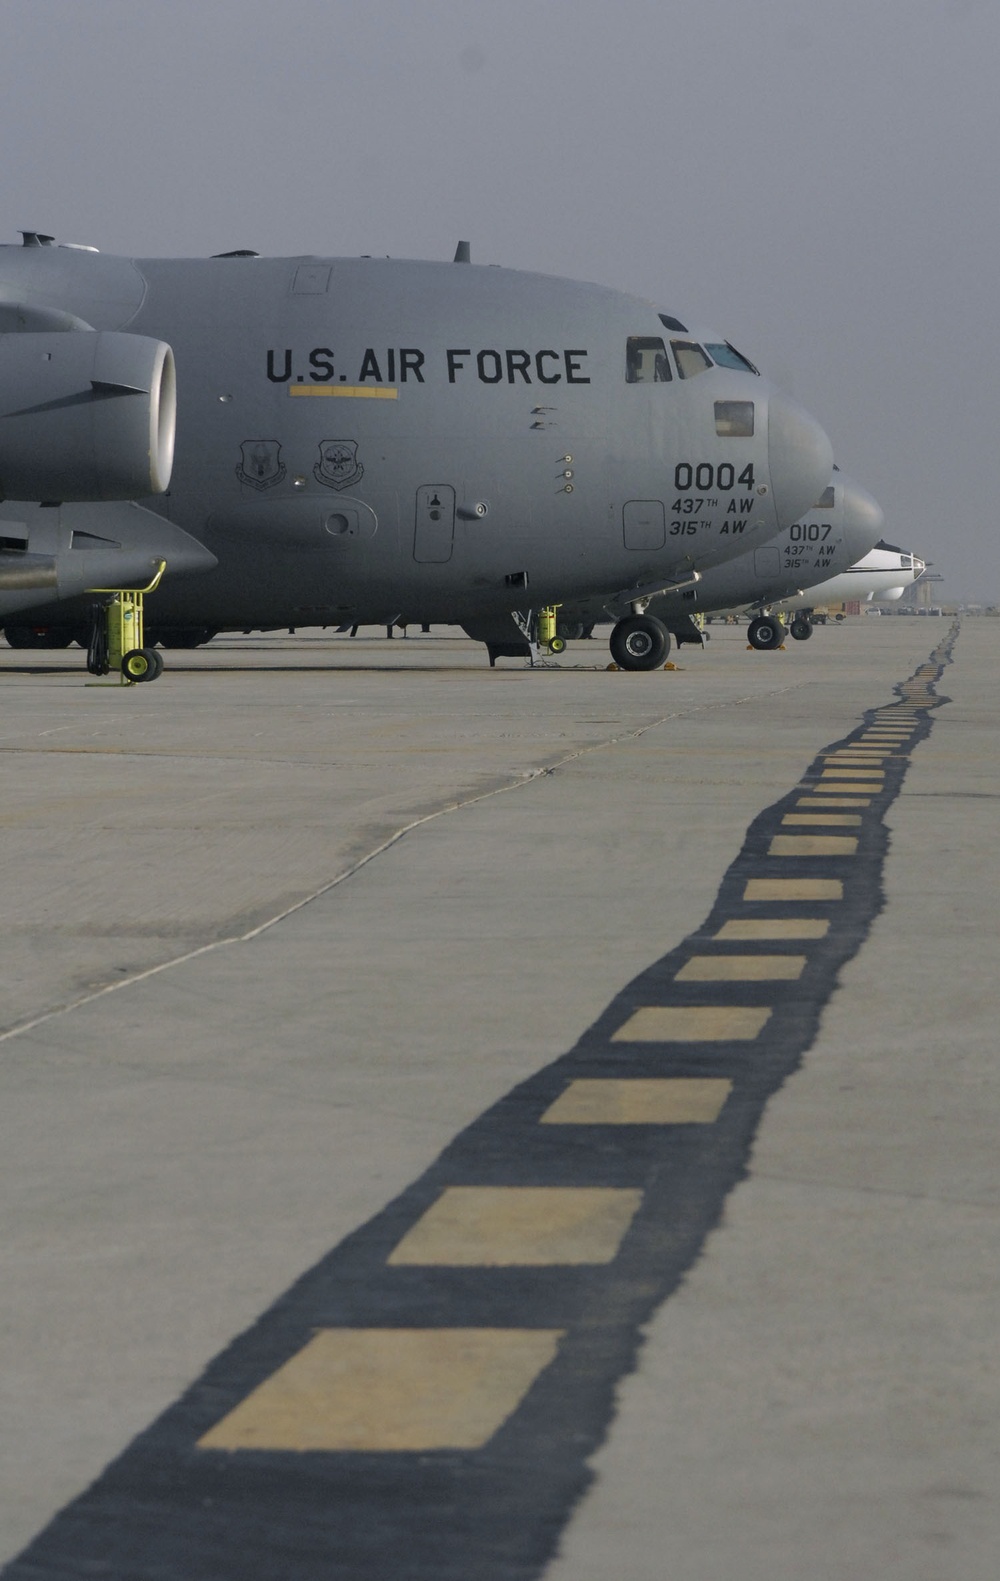 C-17's in Afghanistan